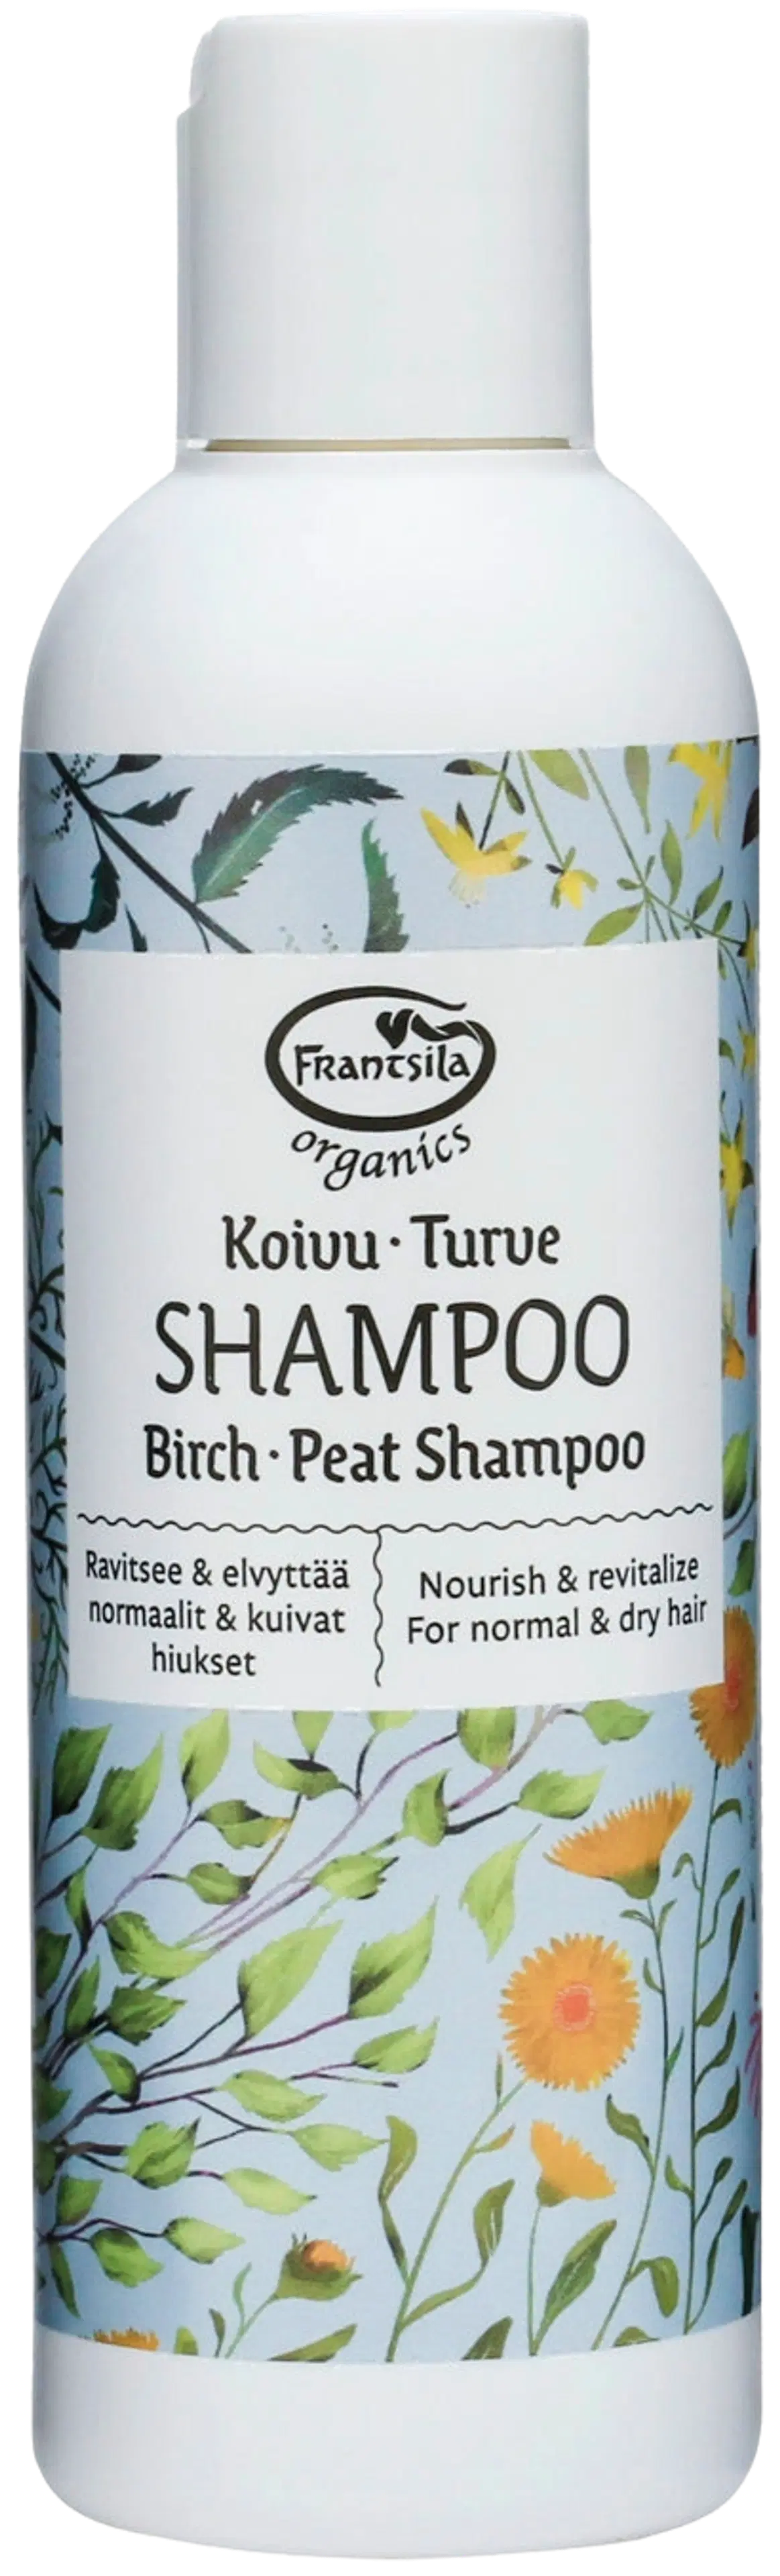 Frantsila 200 ml Koivu-turve shampoo